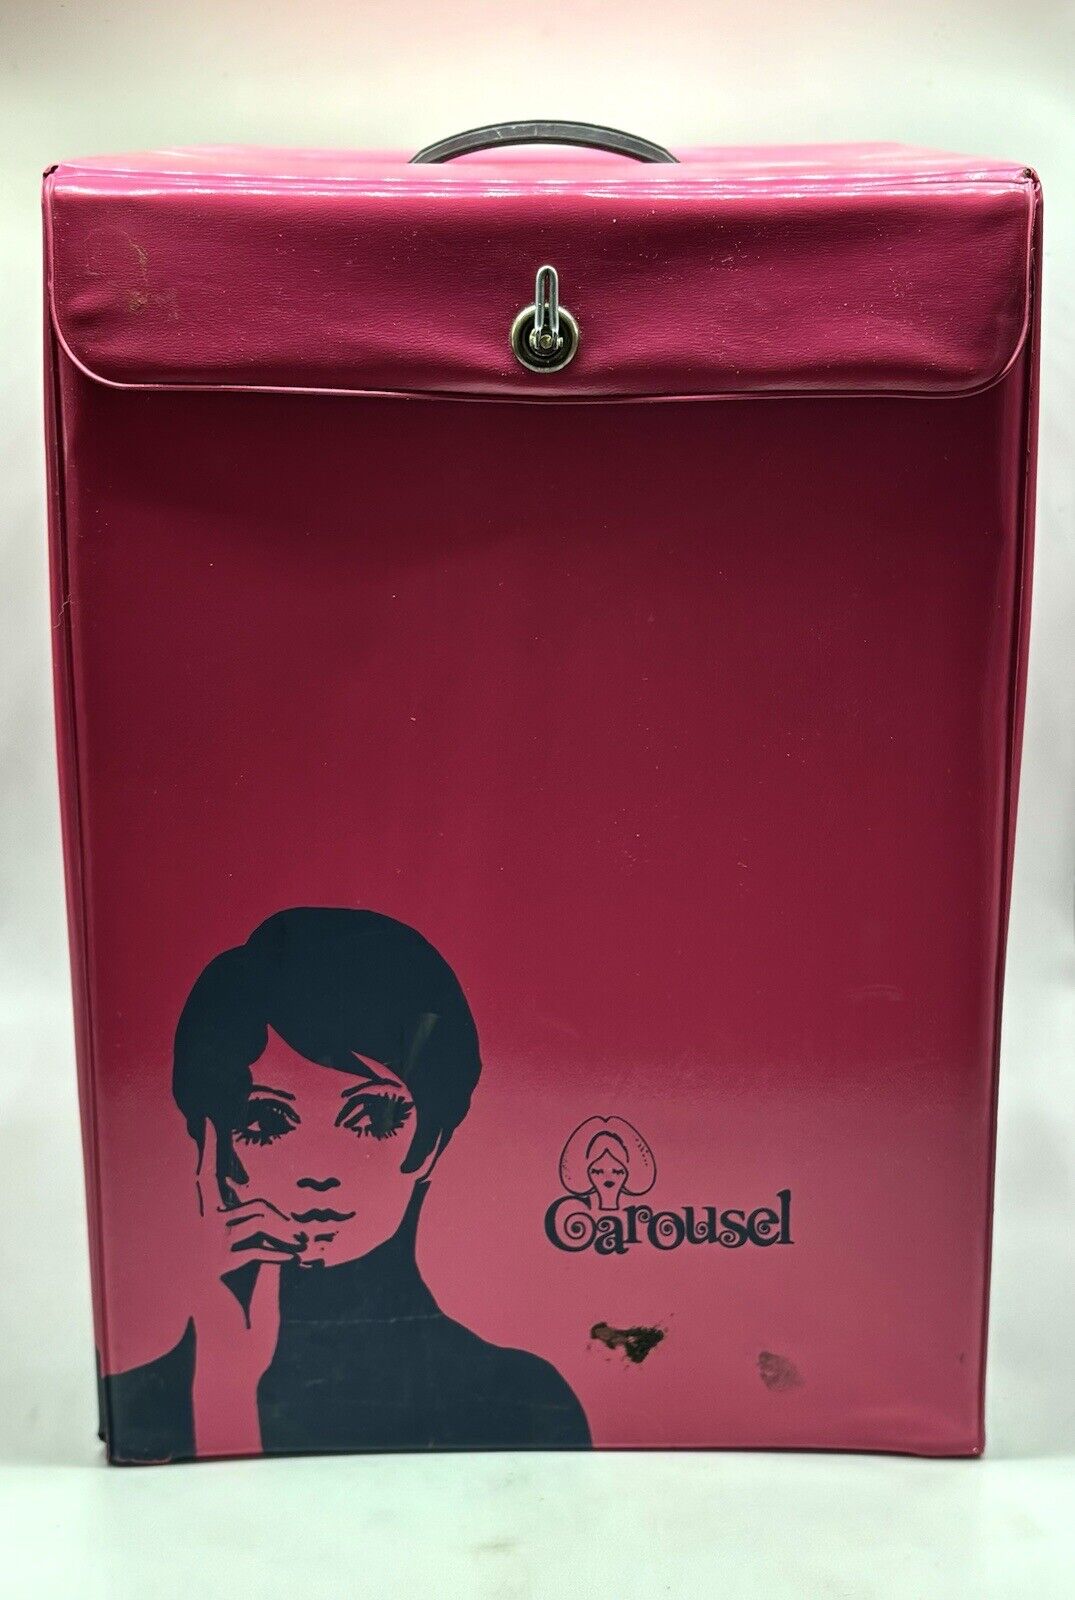 Carousel Mod Hot Pink Vinyl Wig Twiggy Image Storage Vintage 1960s Box Case Doll